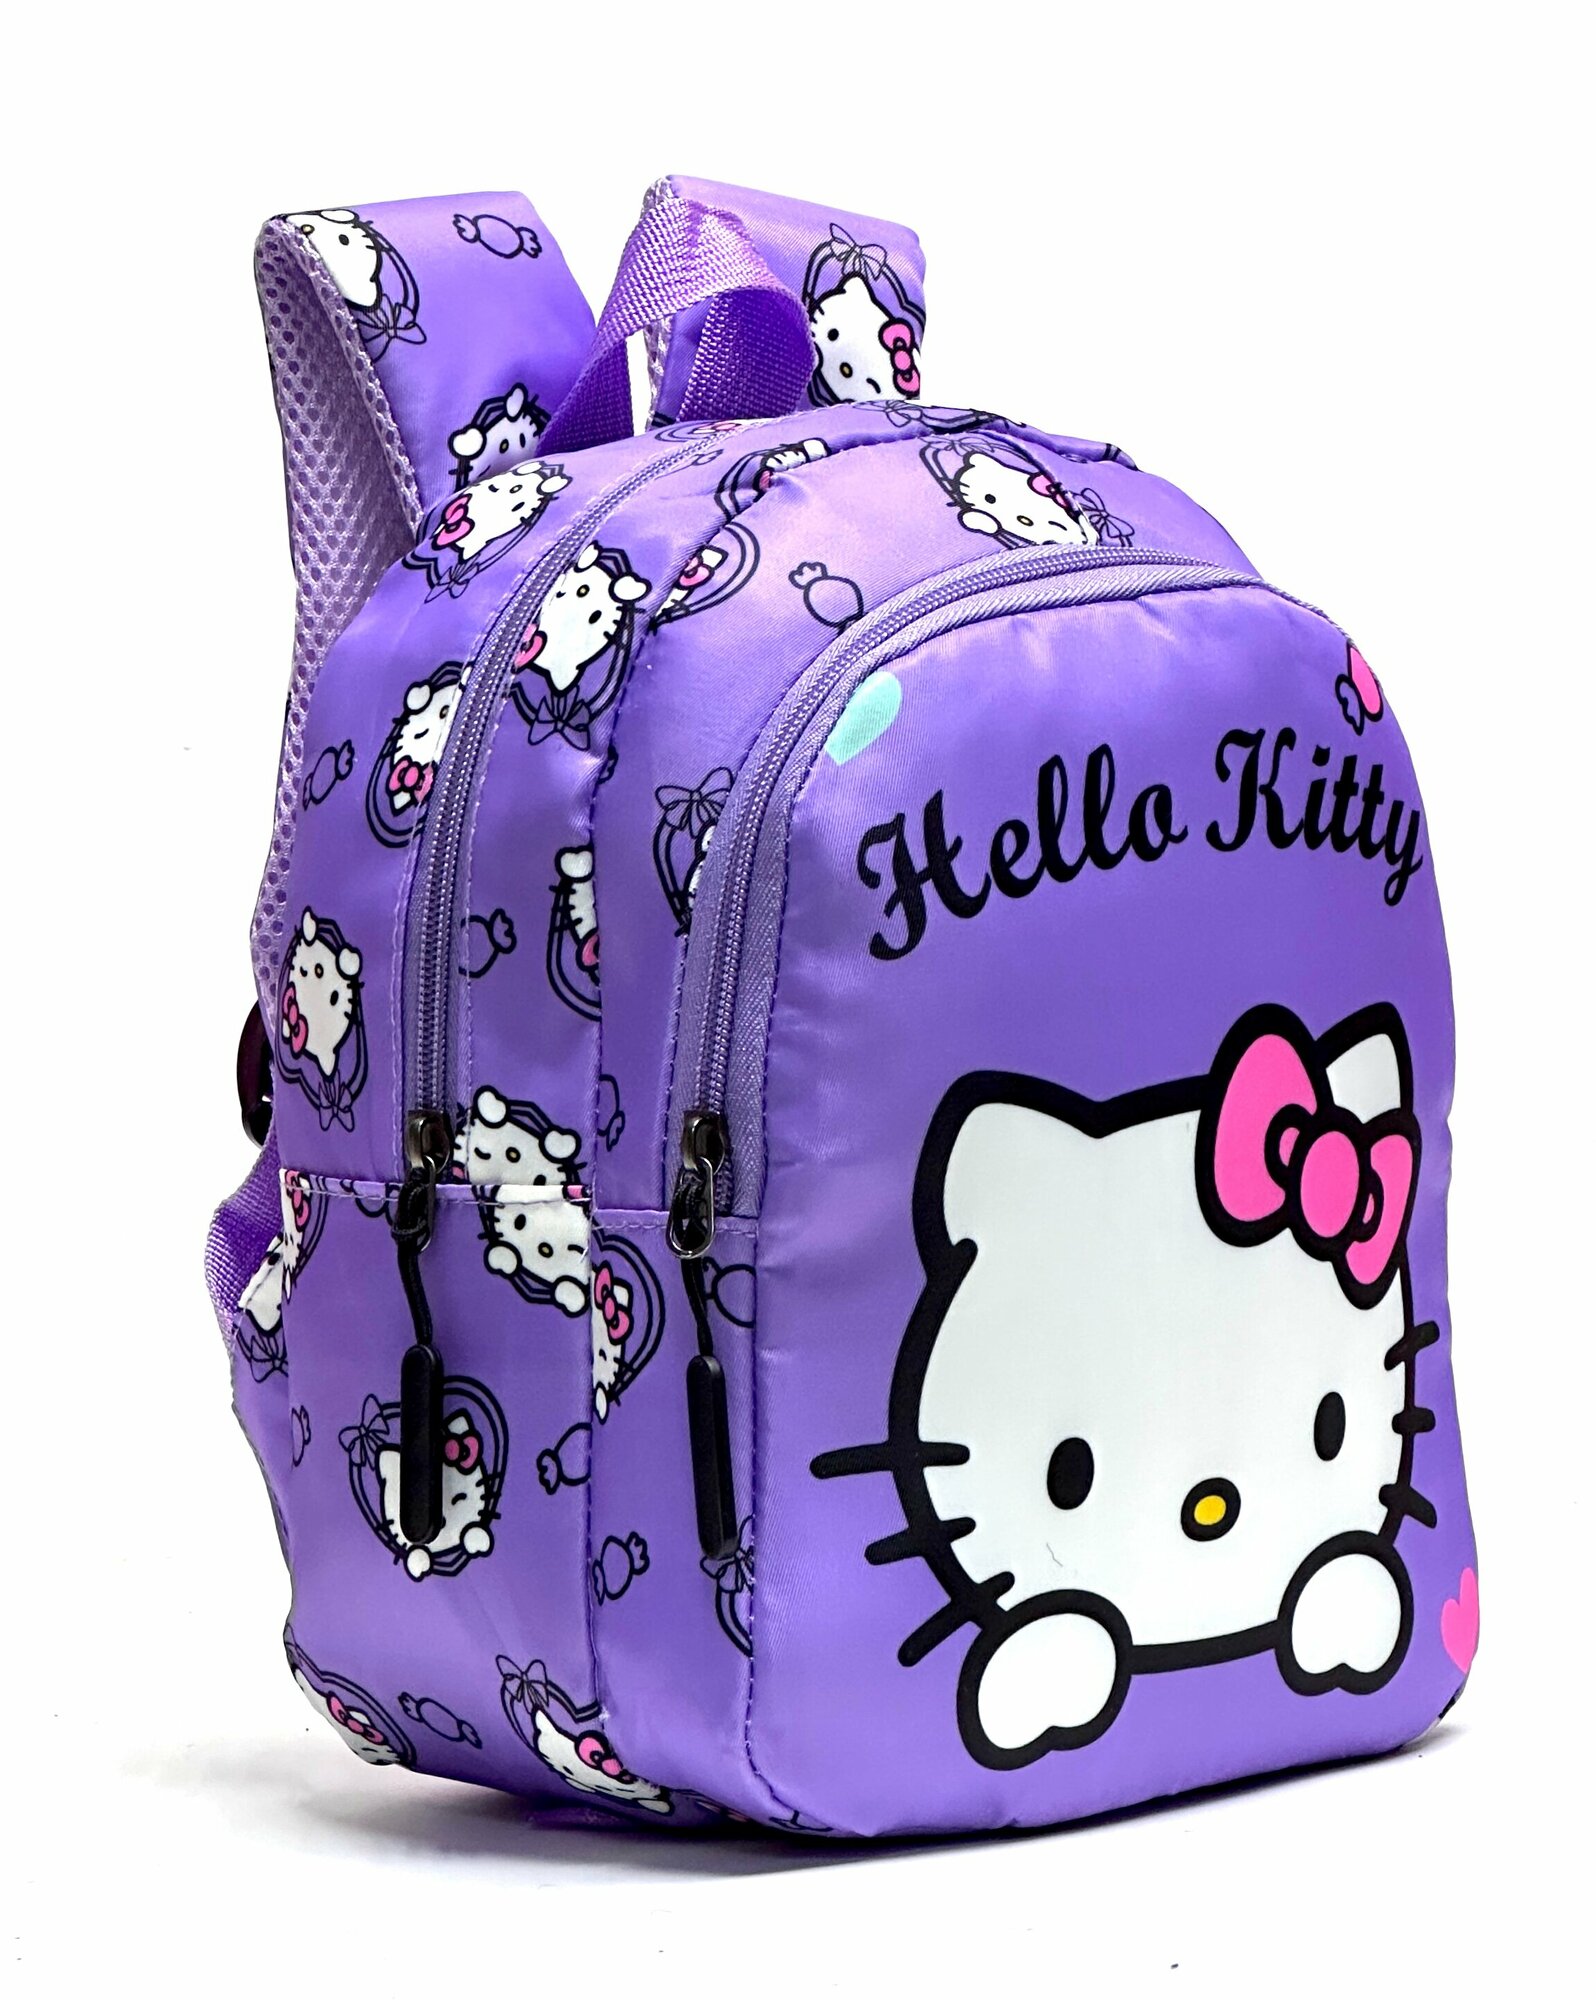 Рюкзак для девочки Хeiio kitti-1